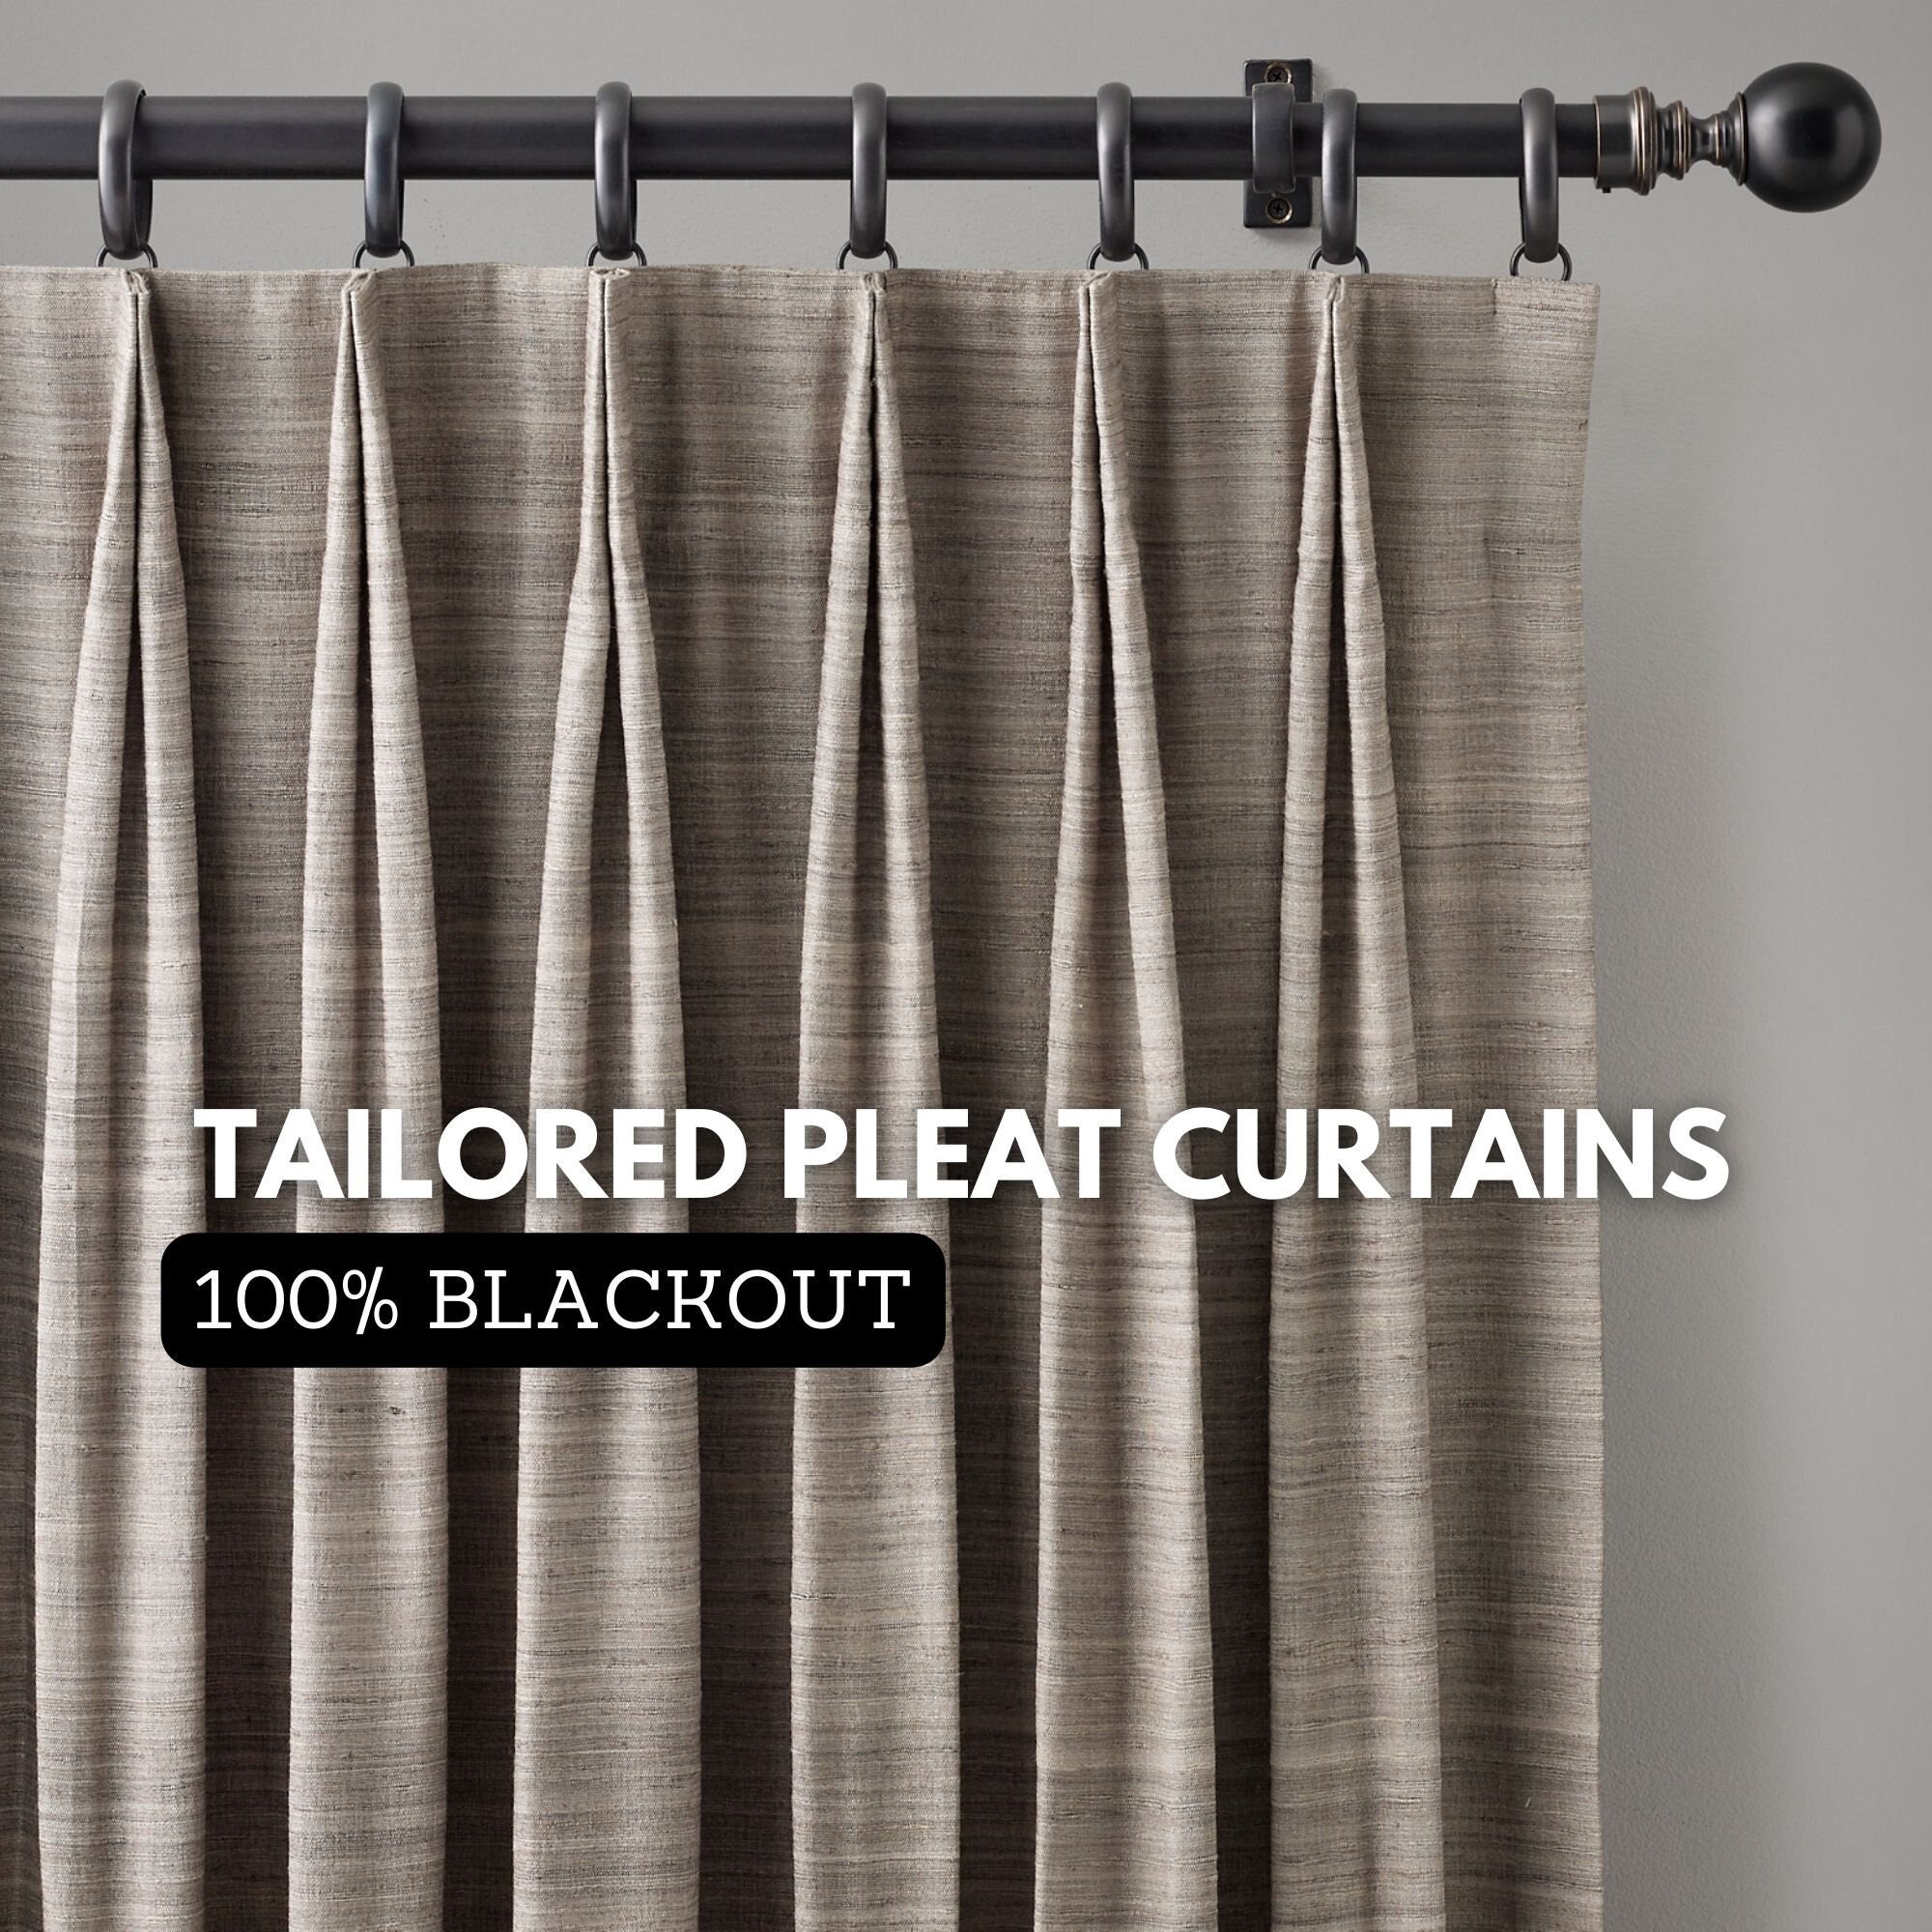 Extra Hold Ready-Made Curtain Iron-On Hem Tape - 33 ft